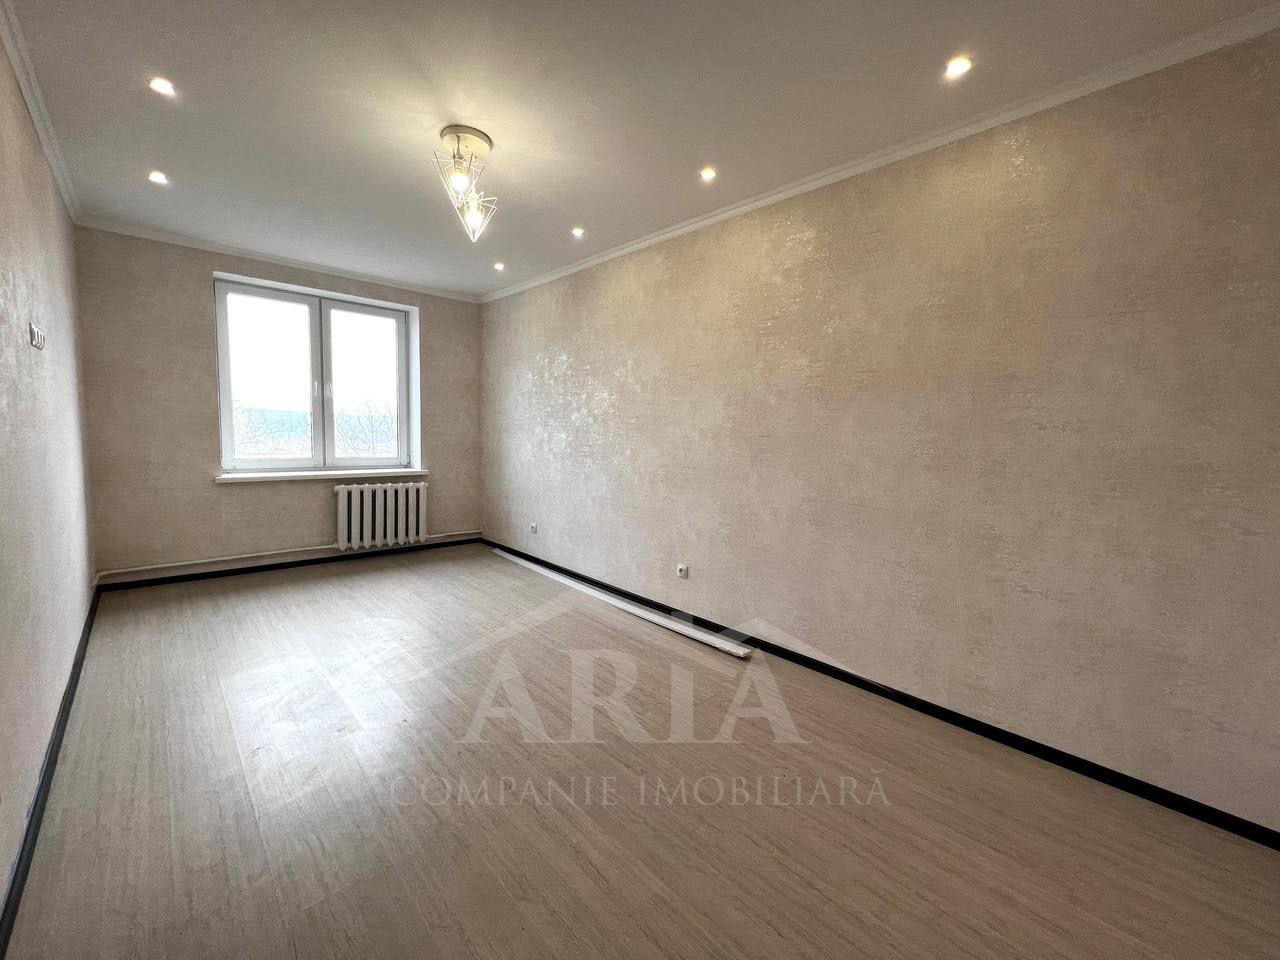 VÂNDUT Apartament de vânzare, Chișinău, sec. Ciocana, o odaie, reparat, 33m2, et. 5